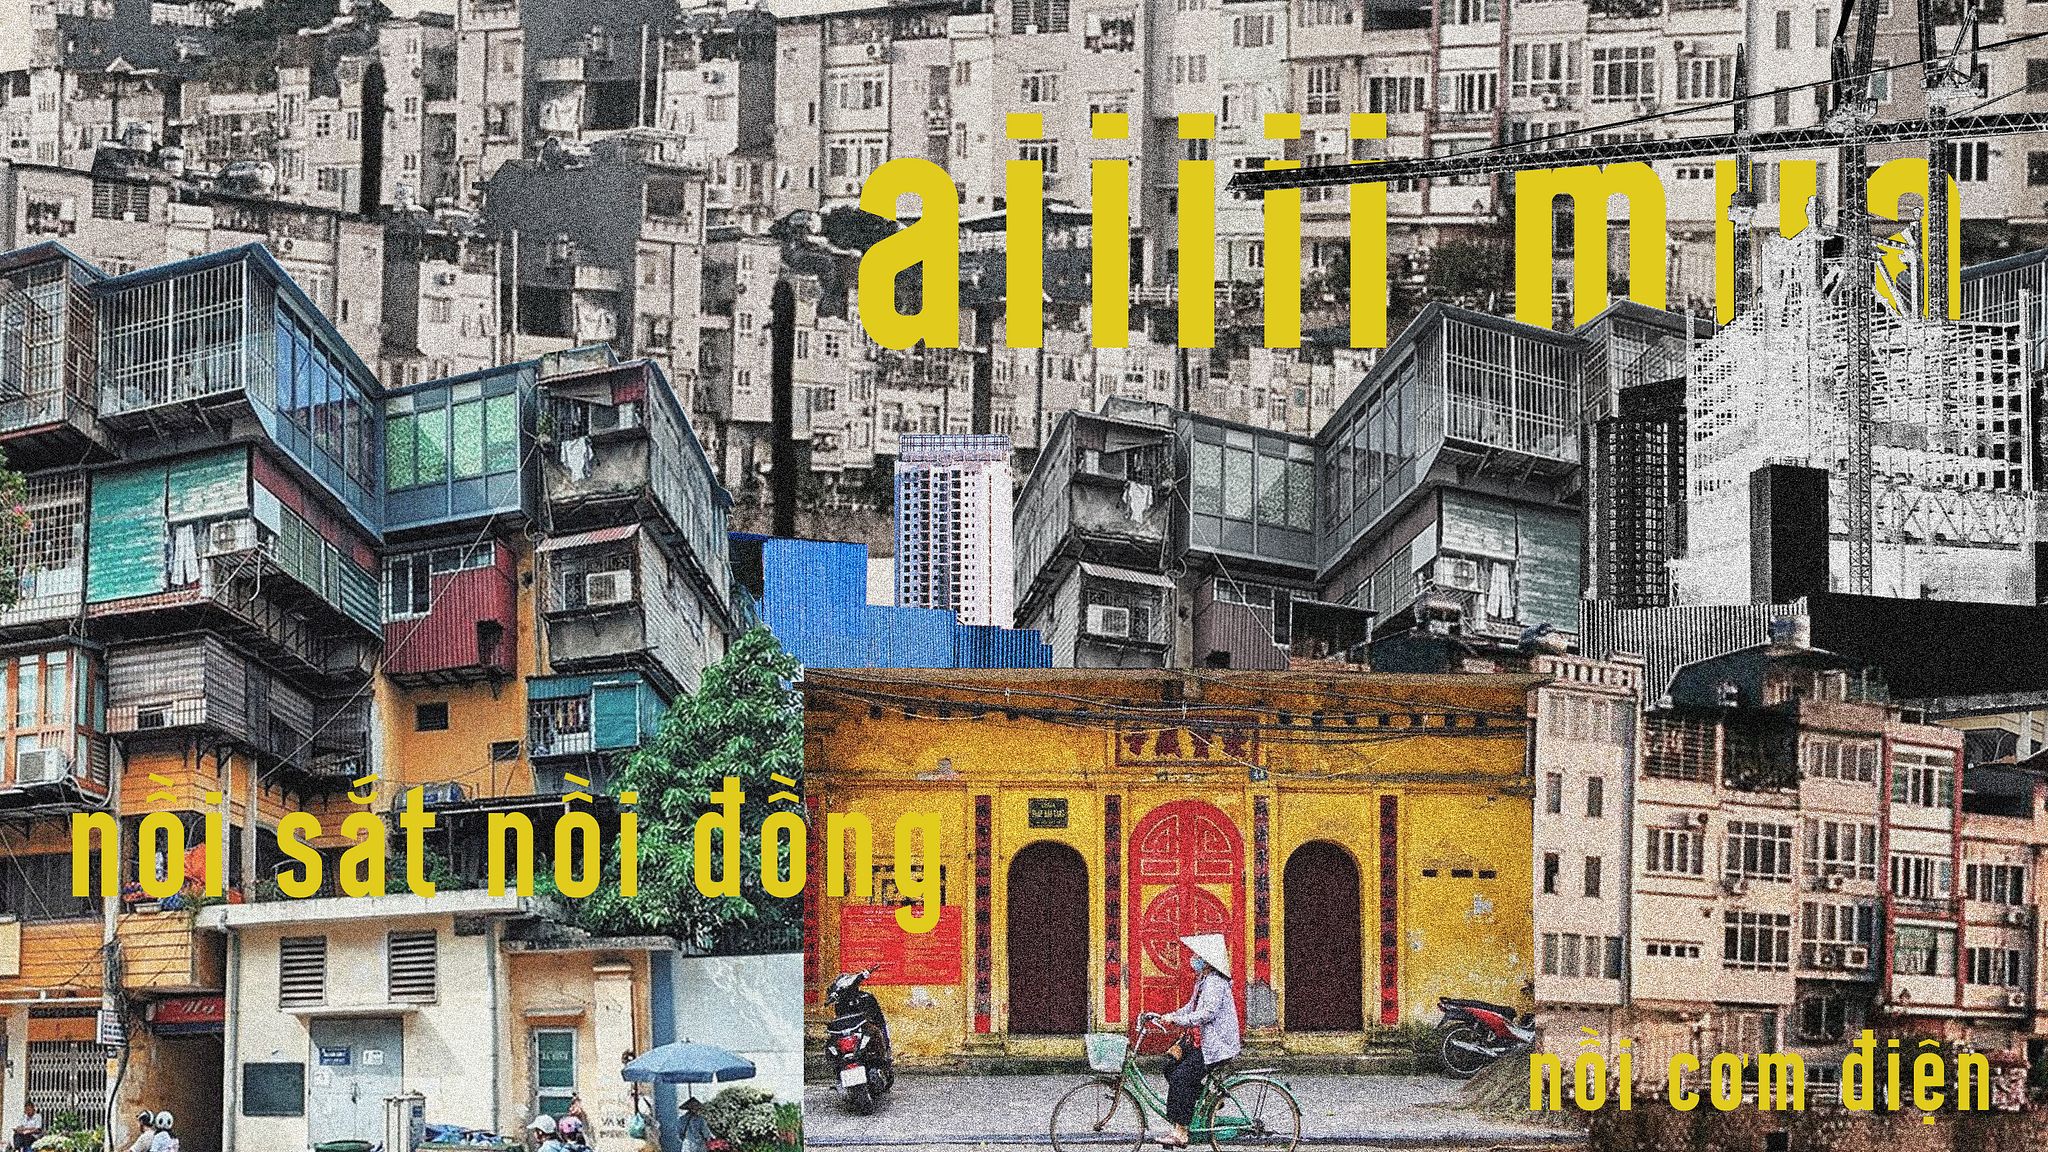 S-A-I-G-O-N: Digital Pop Art Project Brings Saigon To Life - Saigoneer